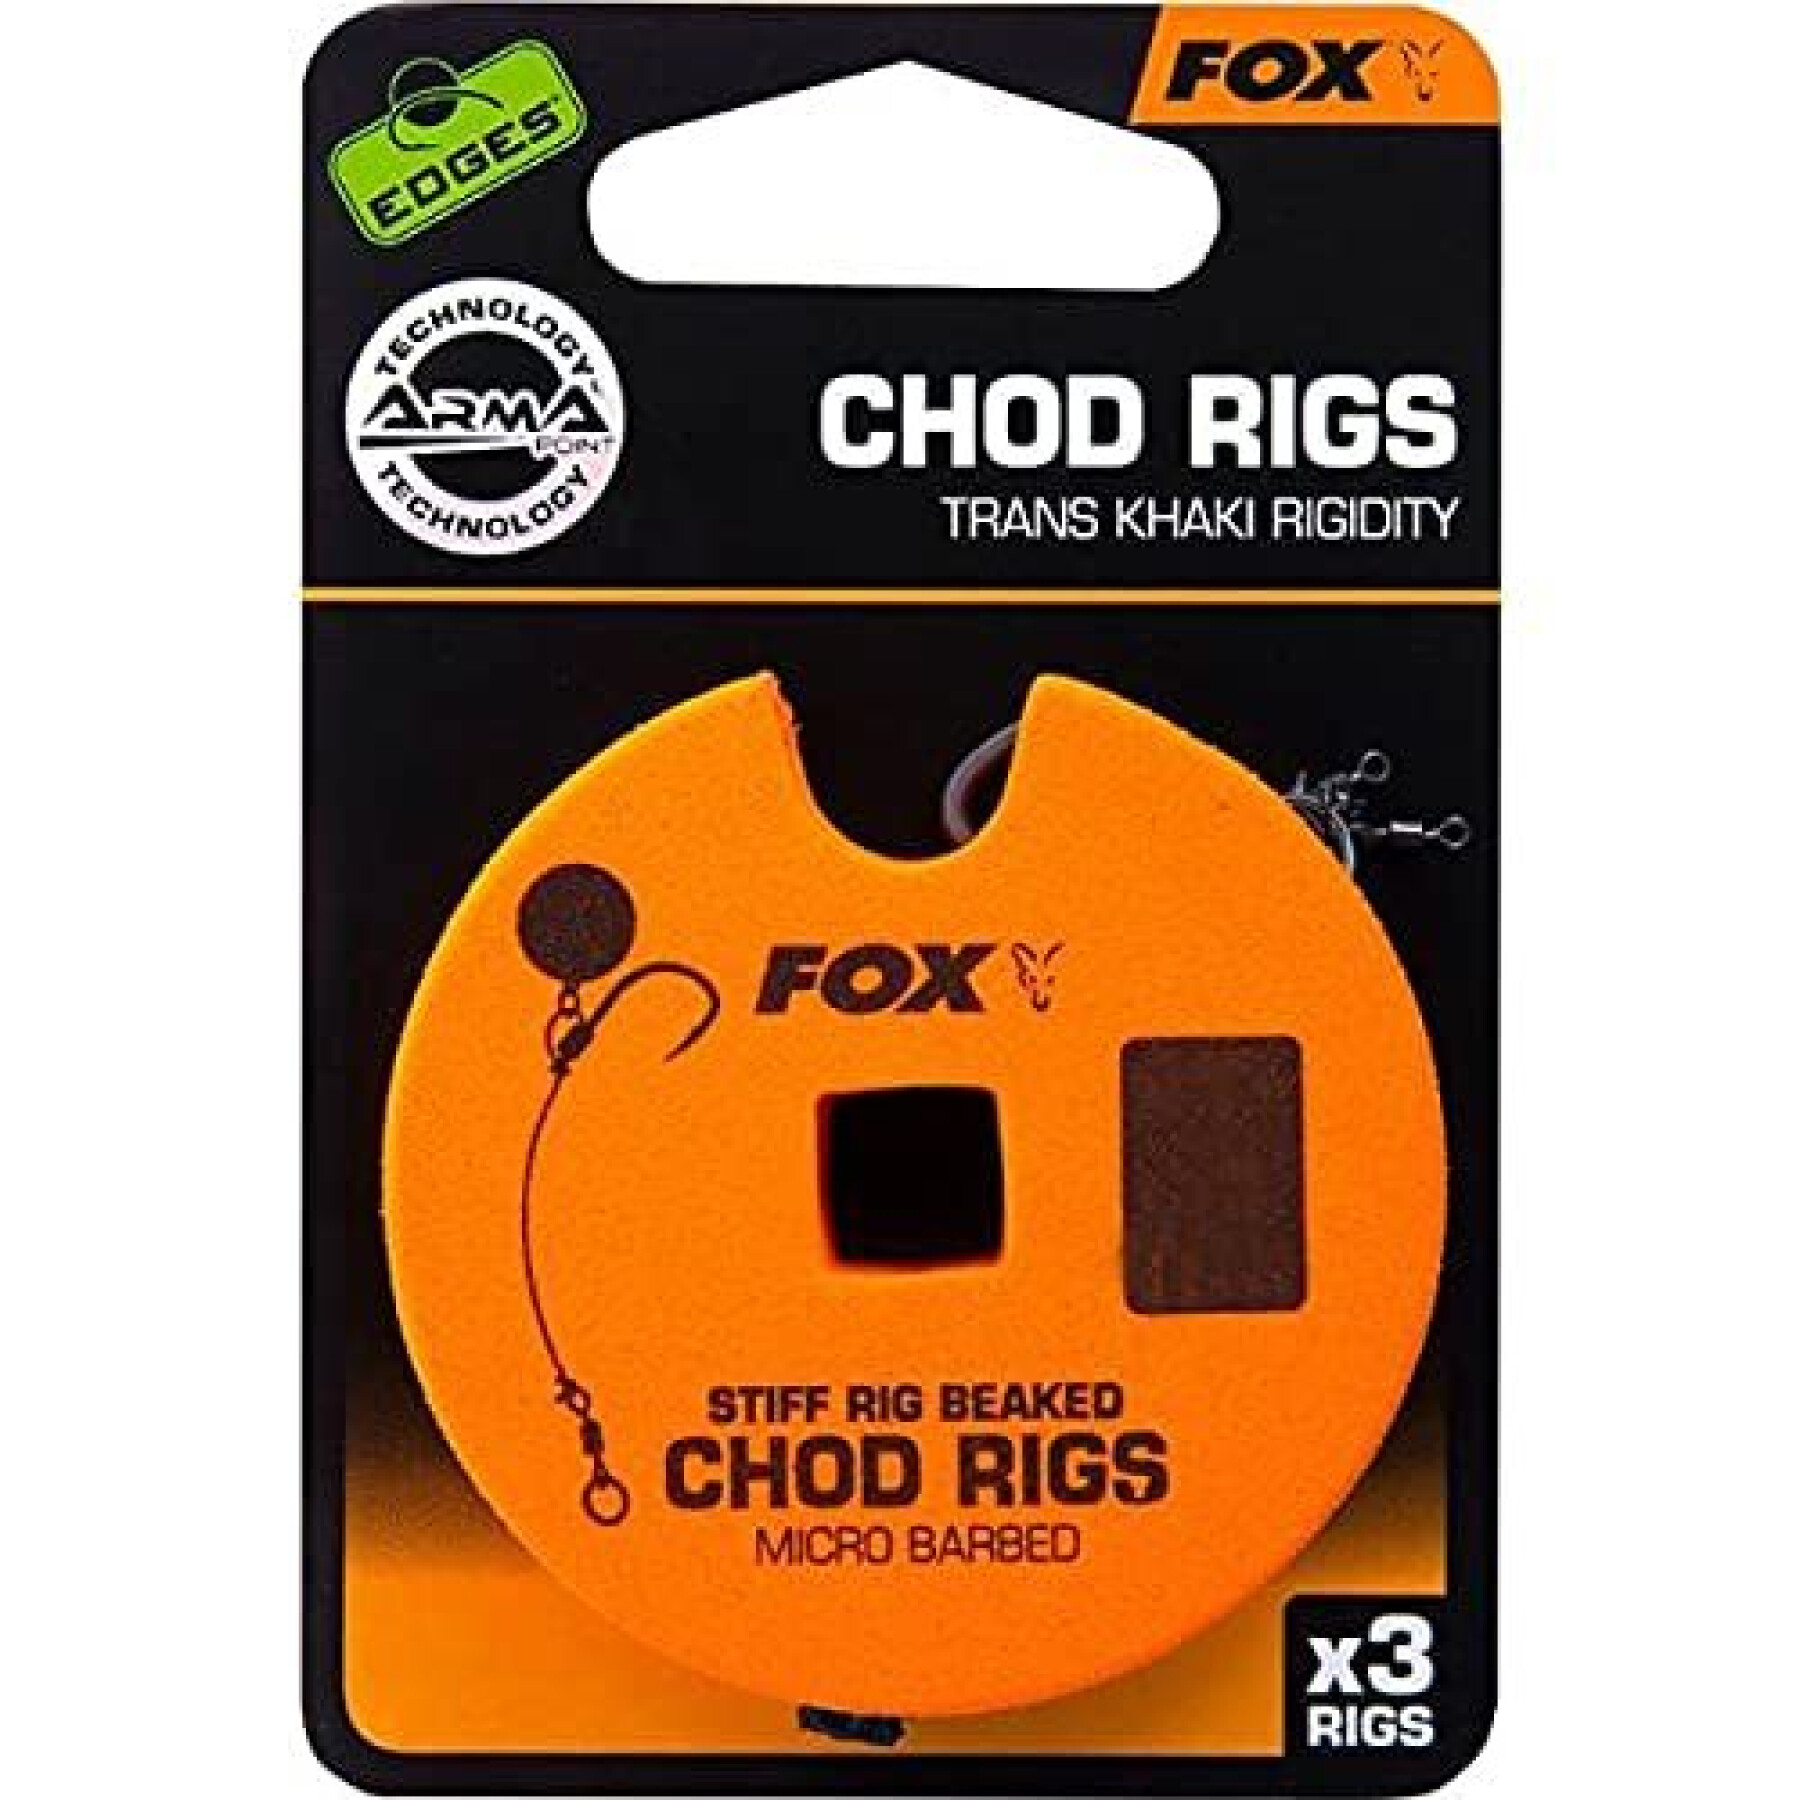 Monofilament Fox rigide 30lb Standard Chod Rig Barbed size 4